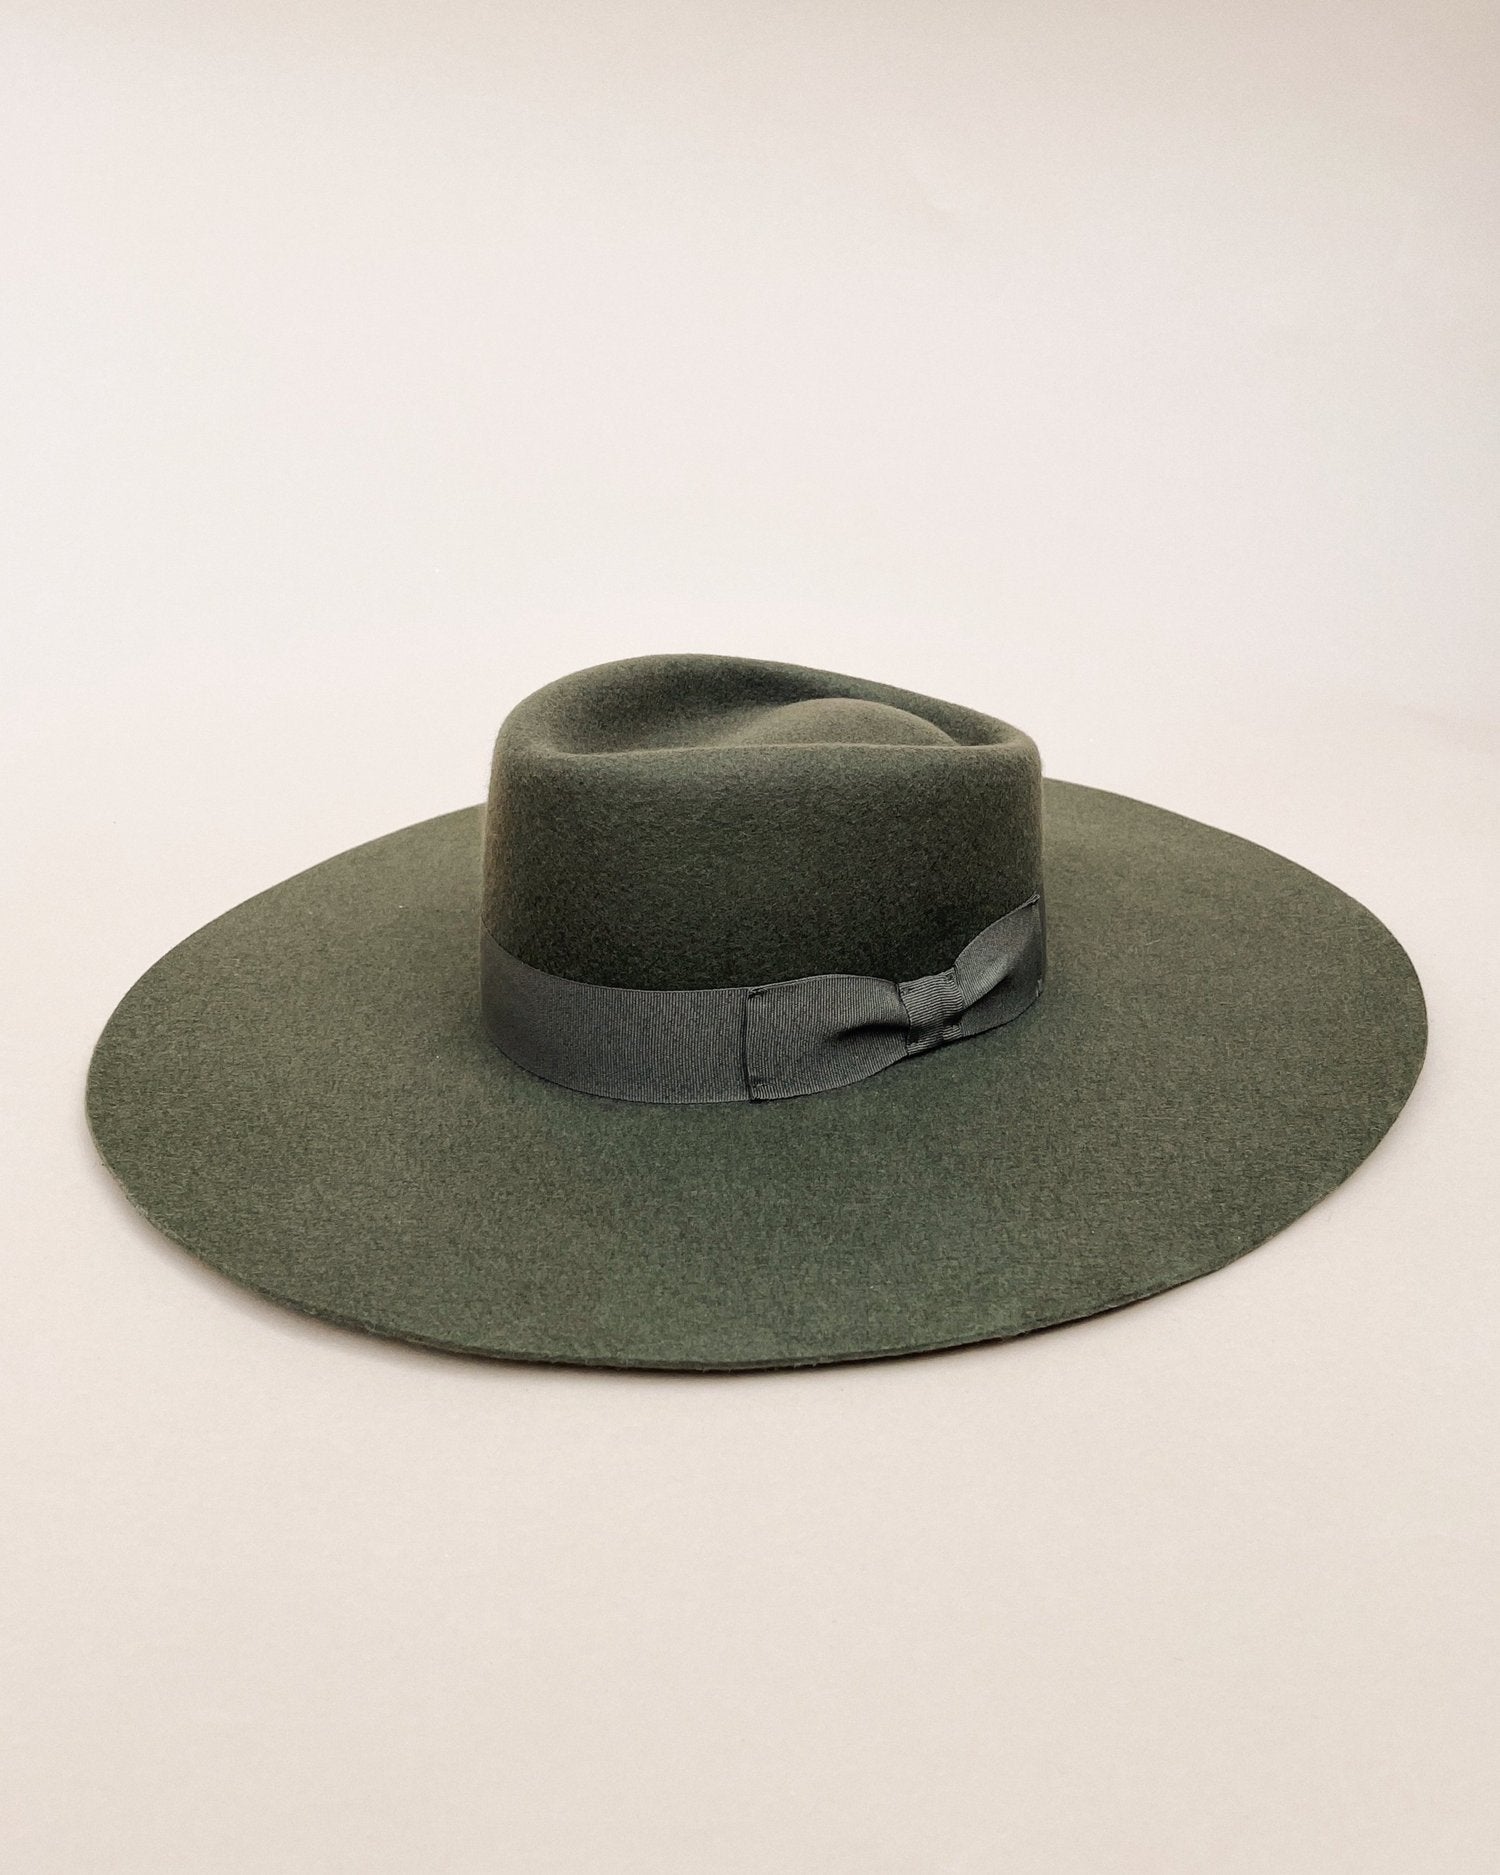 Paul Olive Hat